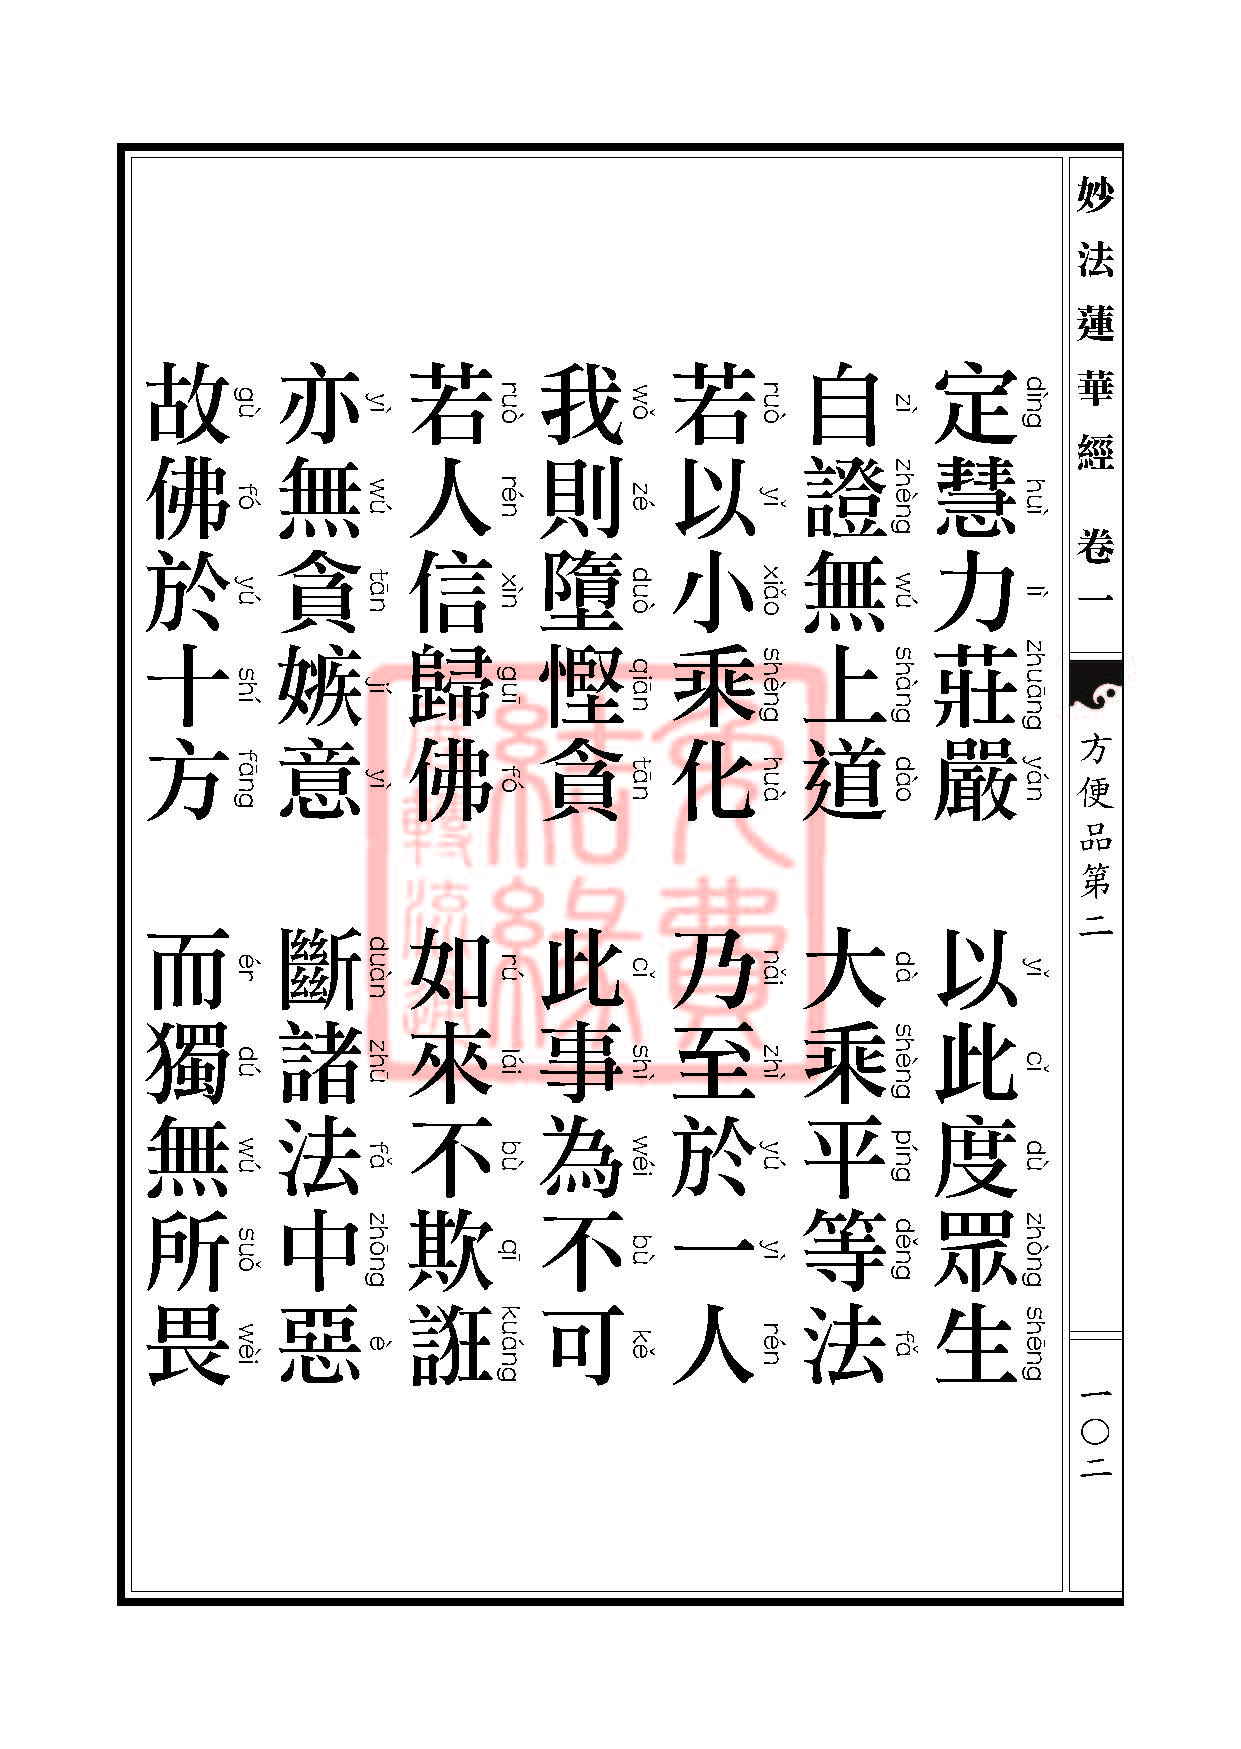 Book_FHJ_HK-A6-PY_Web_ҳ_102.jpg